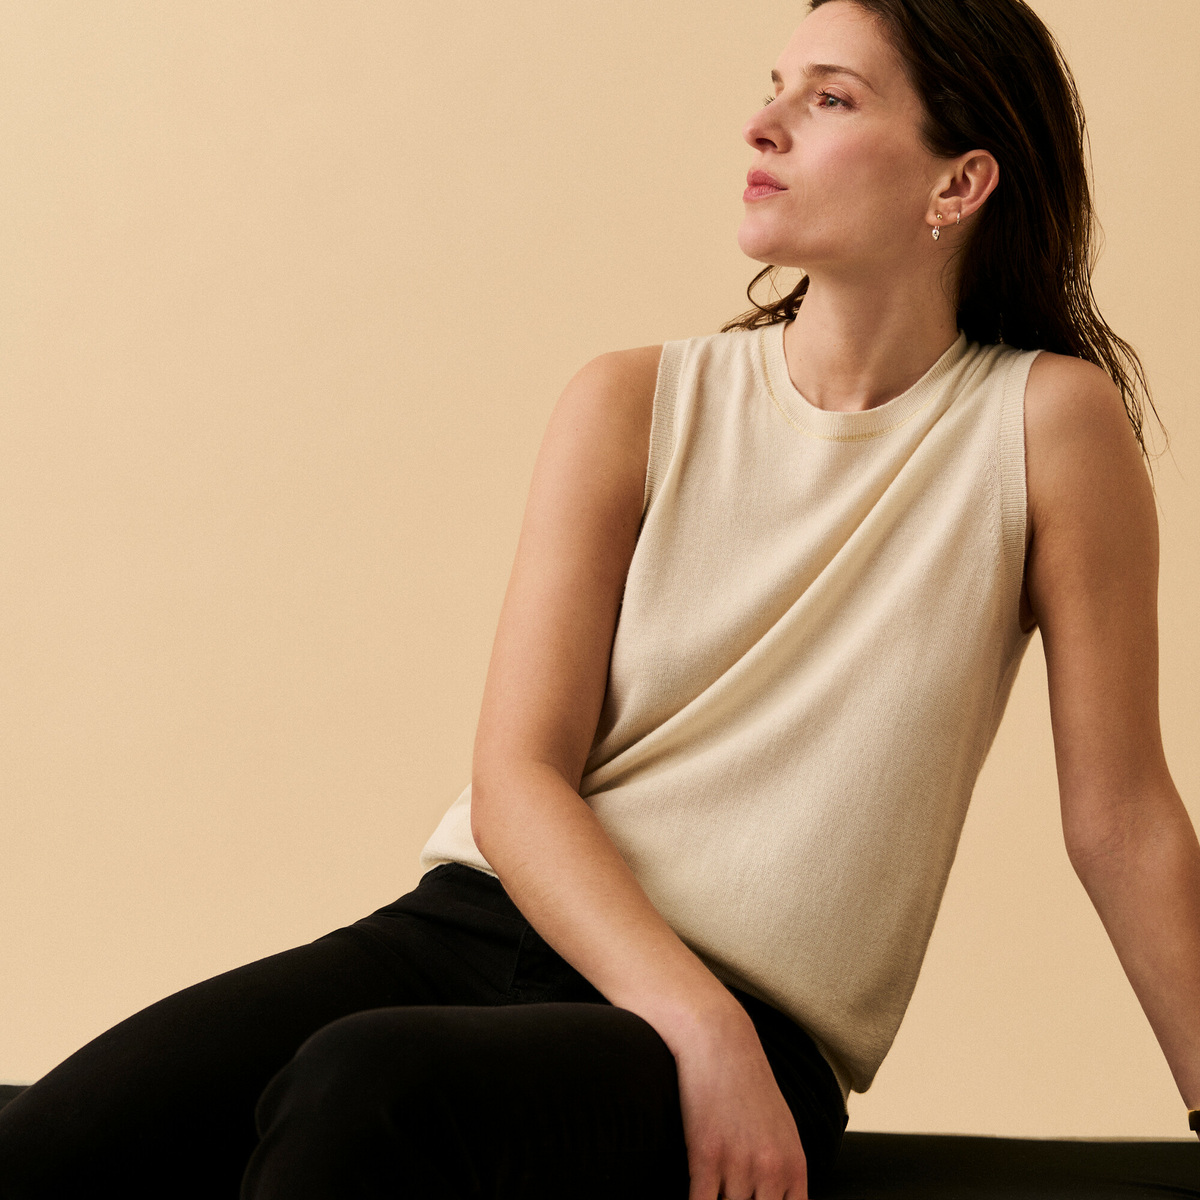 Villette jumper, White - Sleeveless - Silk and cashmere - image 2